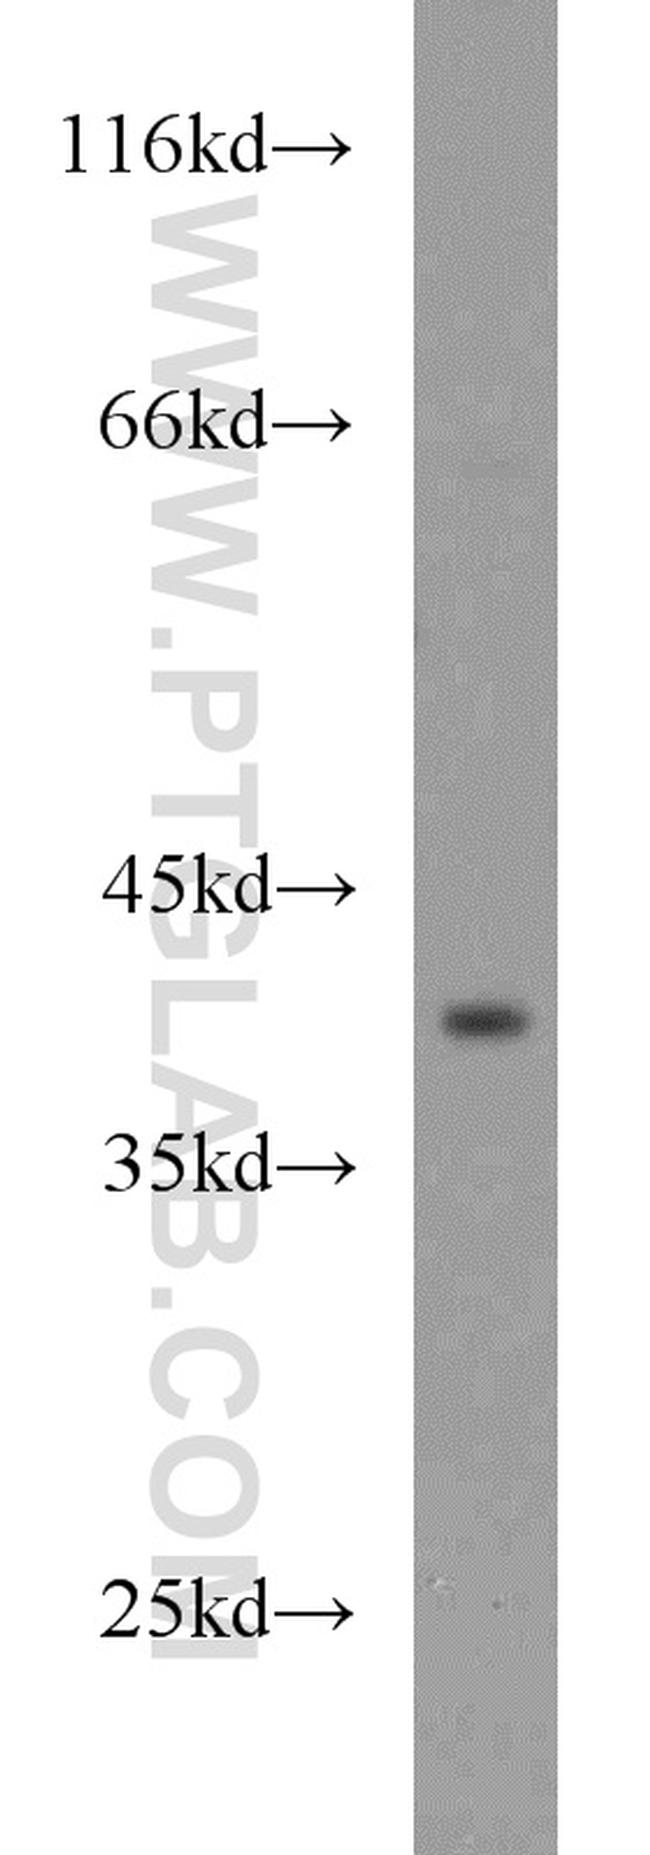 BCAT2 Antibody in Western Blot (WB)